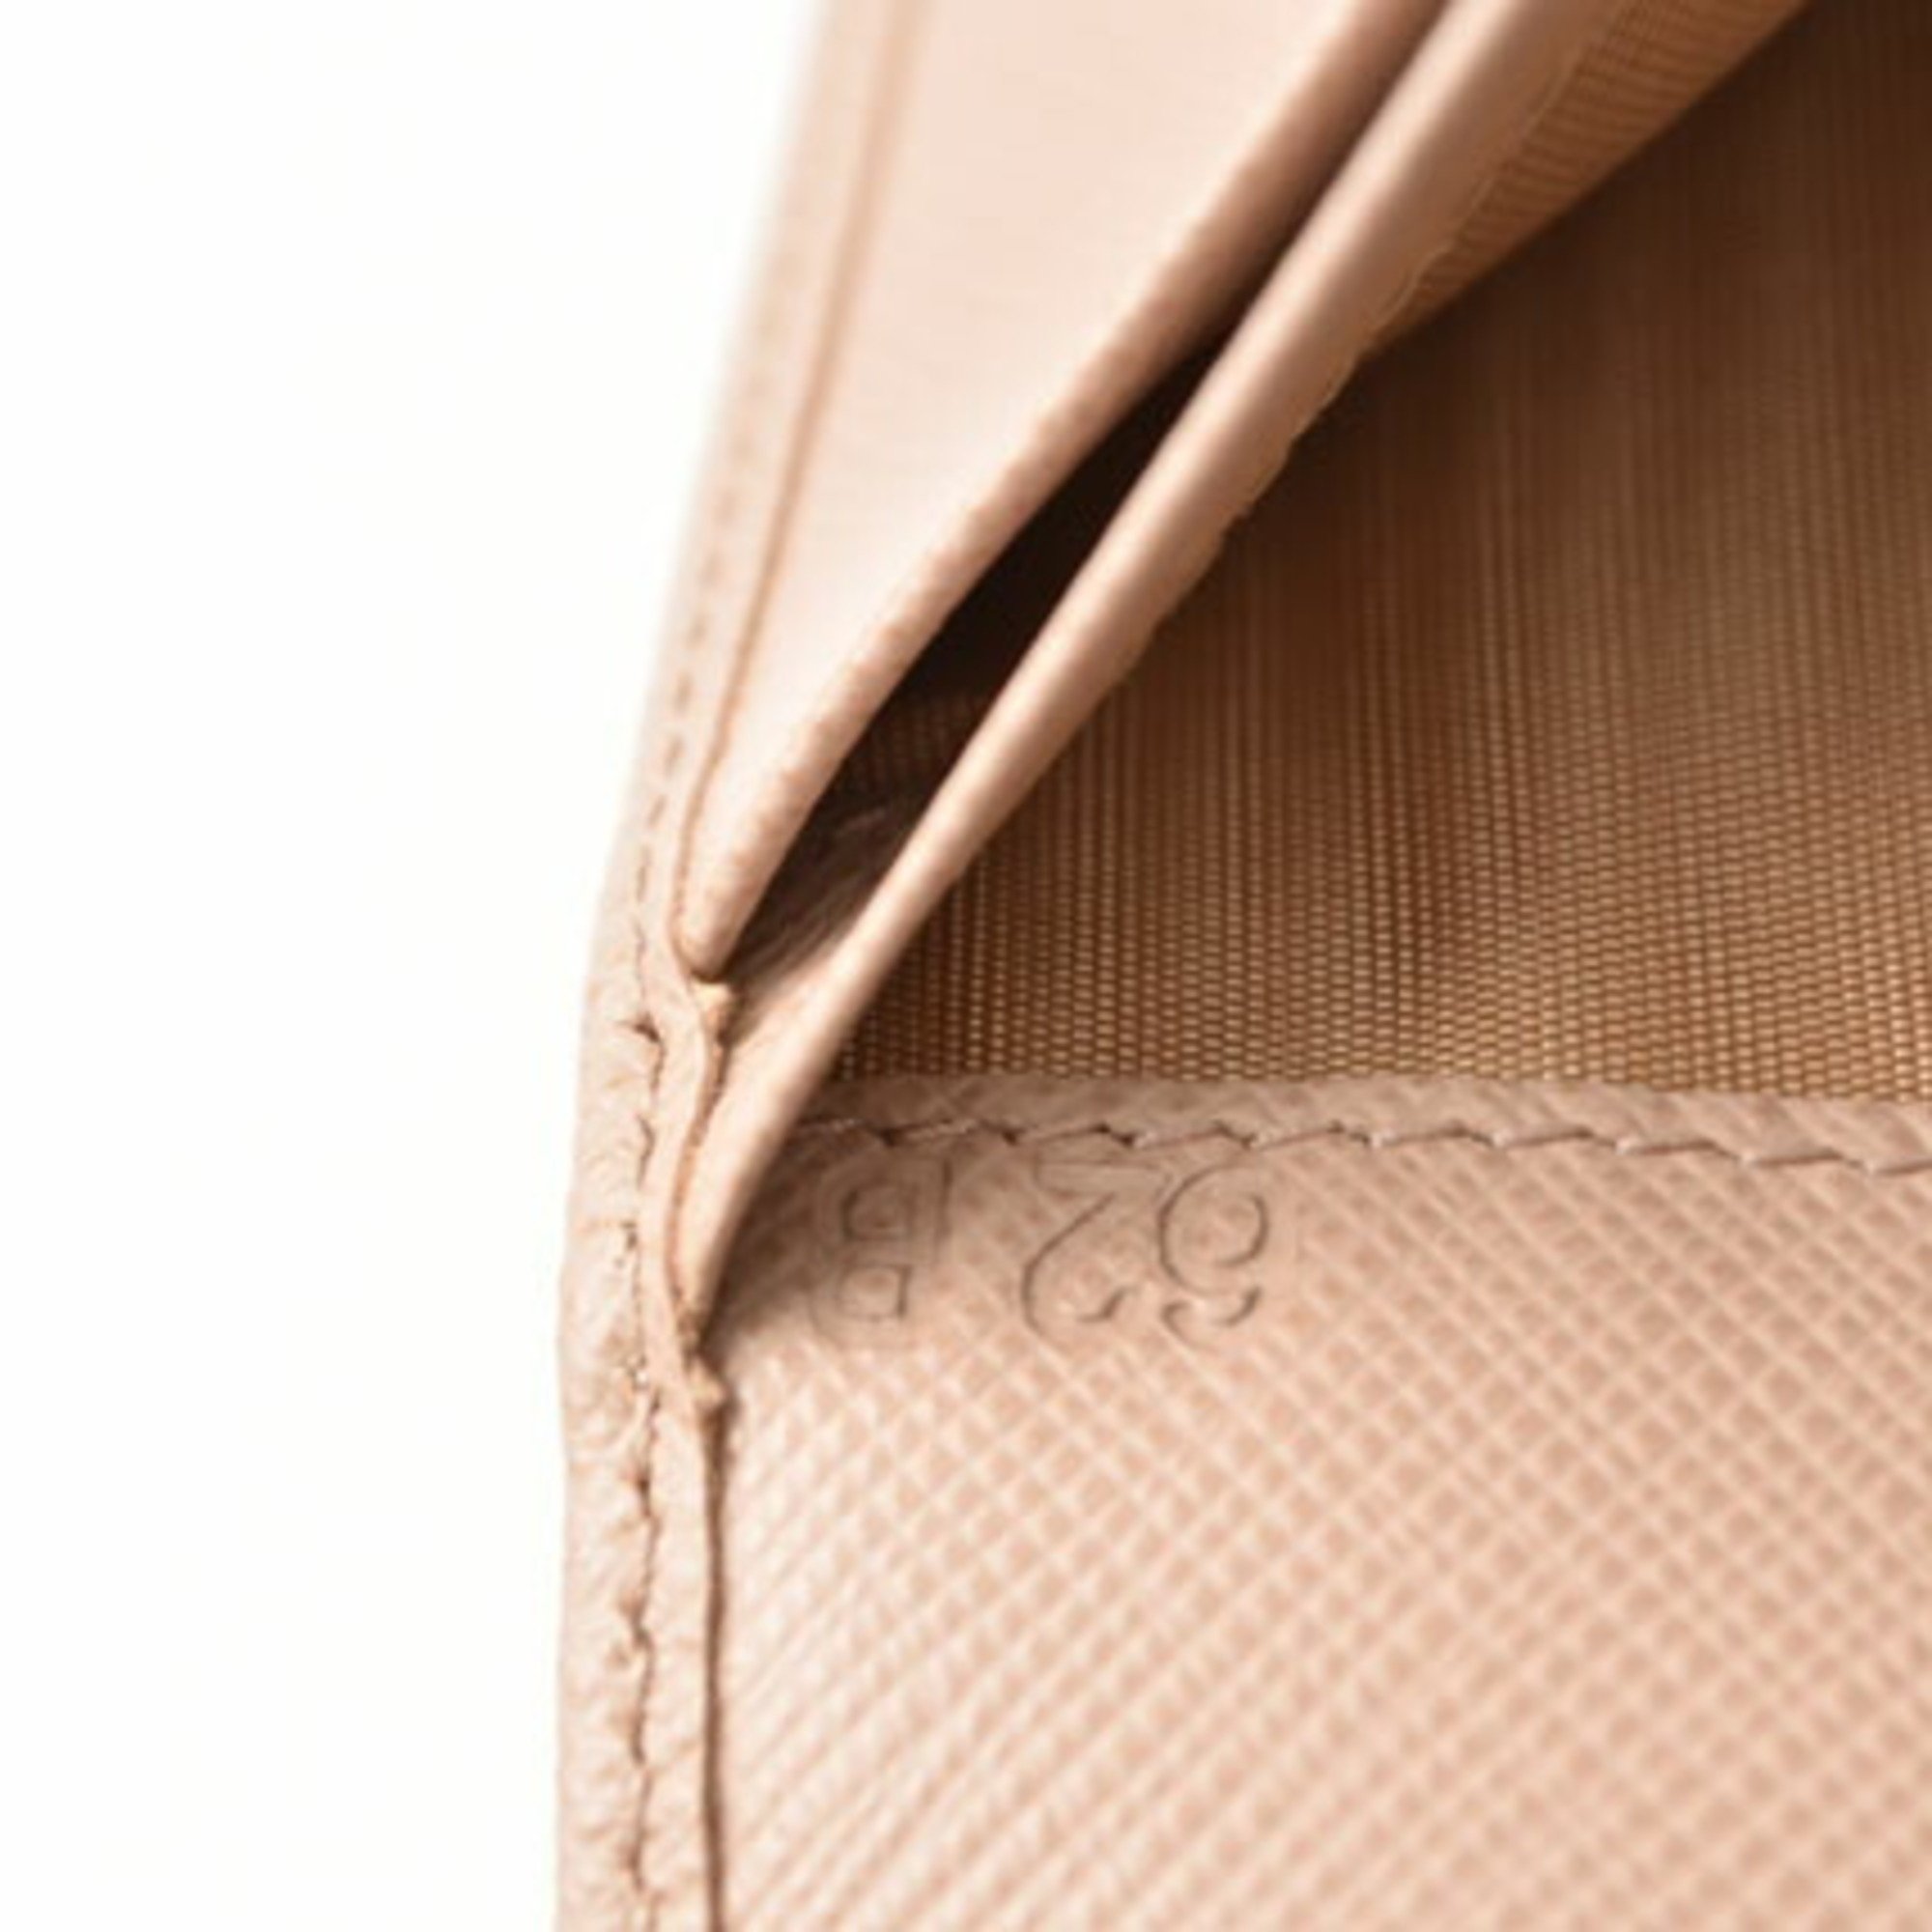 PRADA Wallet Bi-fold 1ML009 SAFFIANO/Leather CIPRIA/Beige